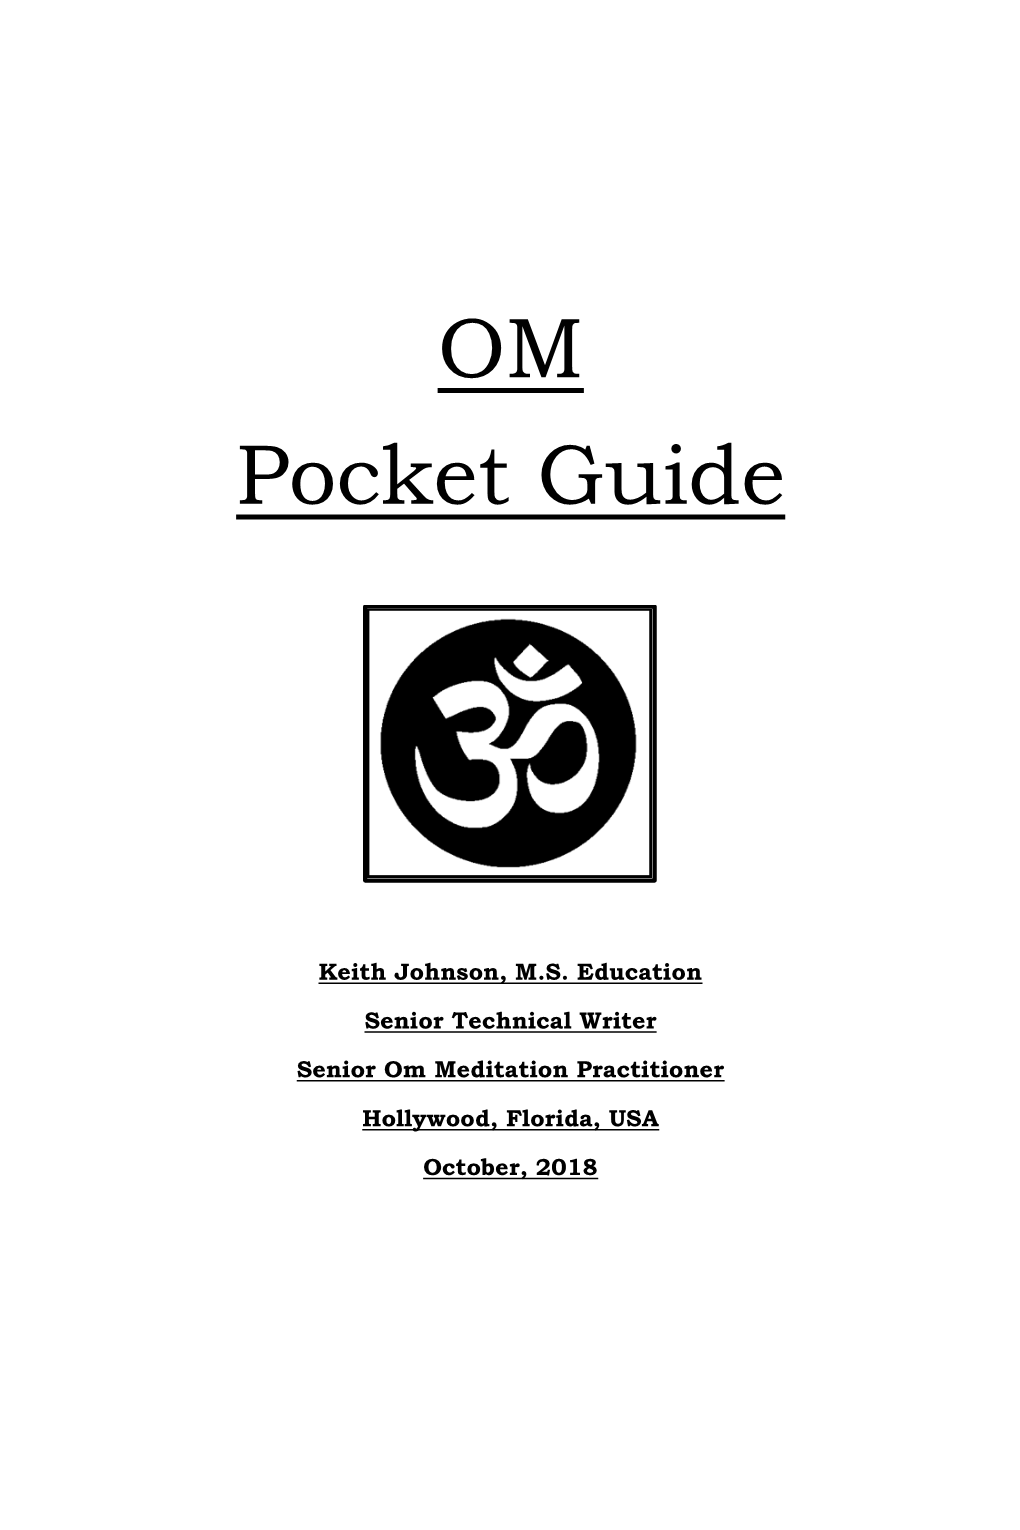 OM Pocket Guide